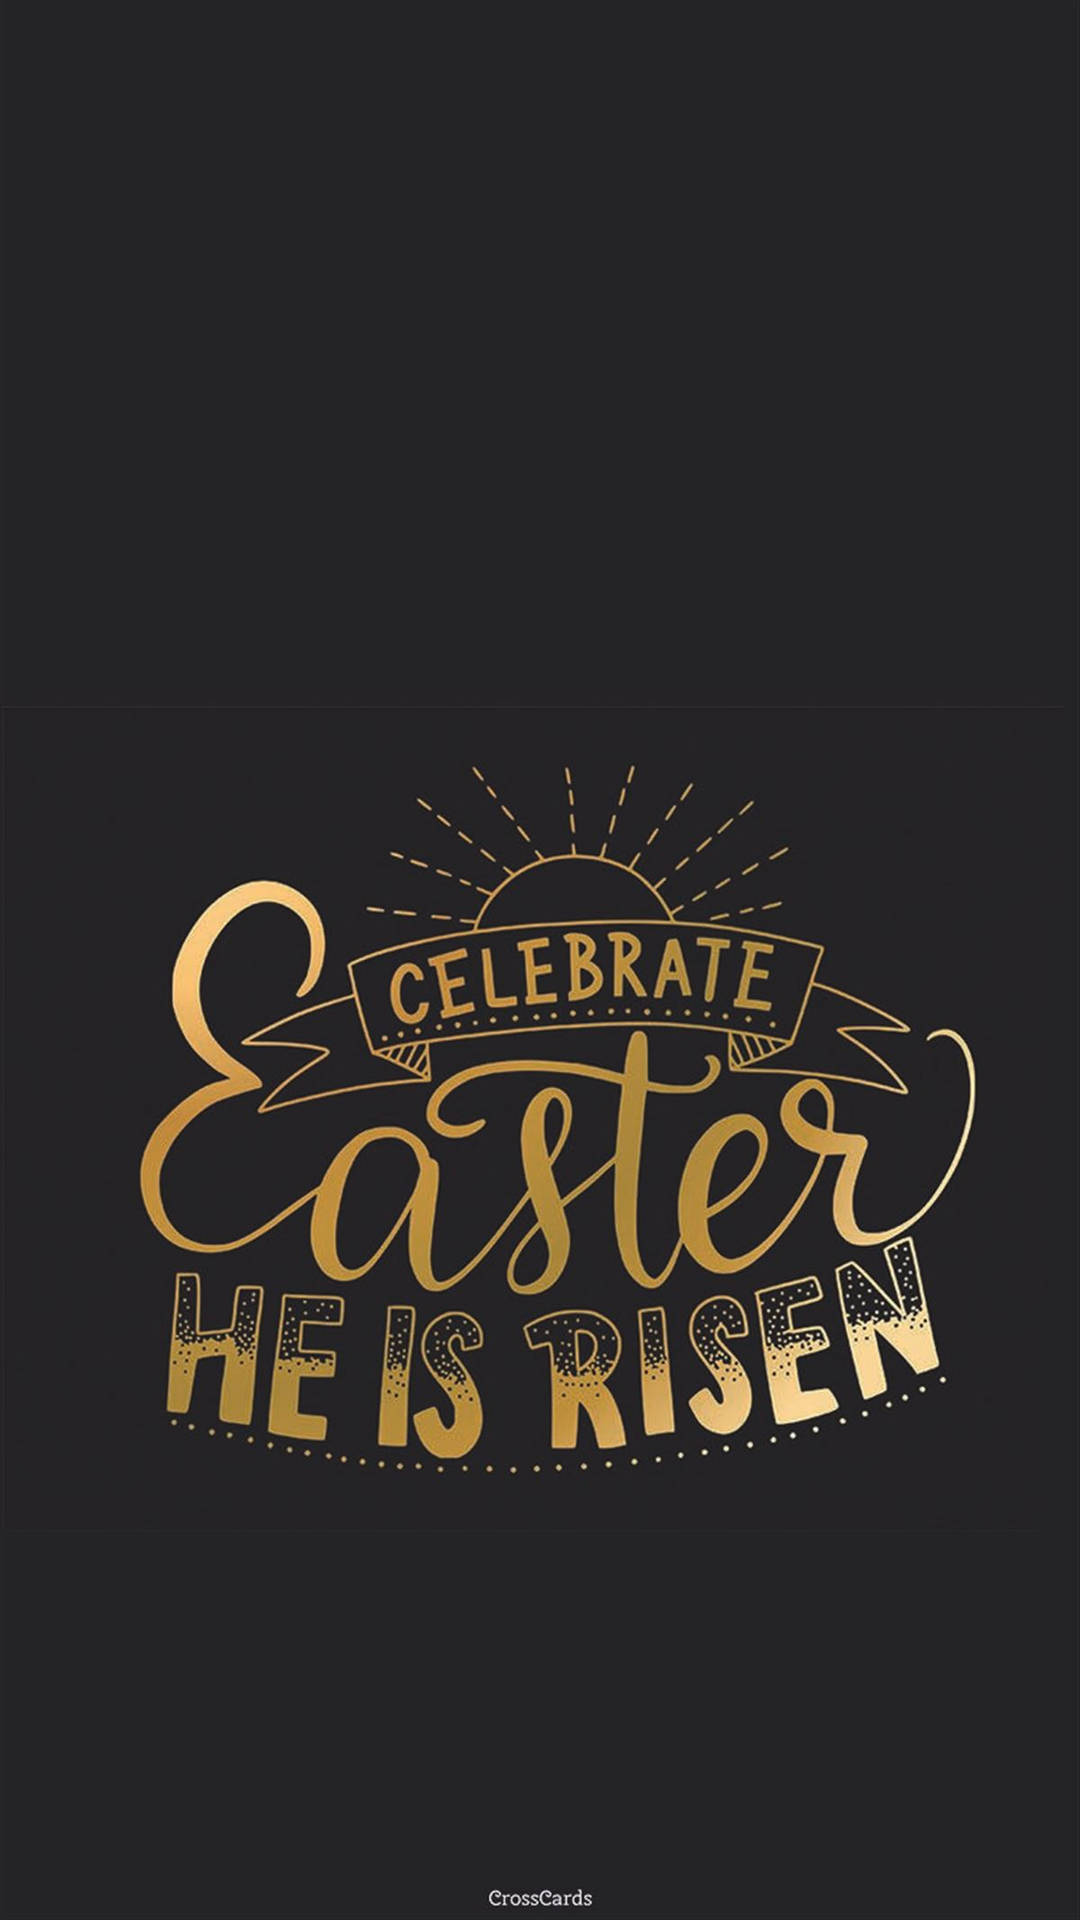 Celebrate Easter He Is Risen Wallpaper